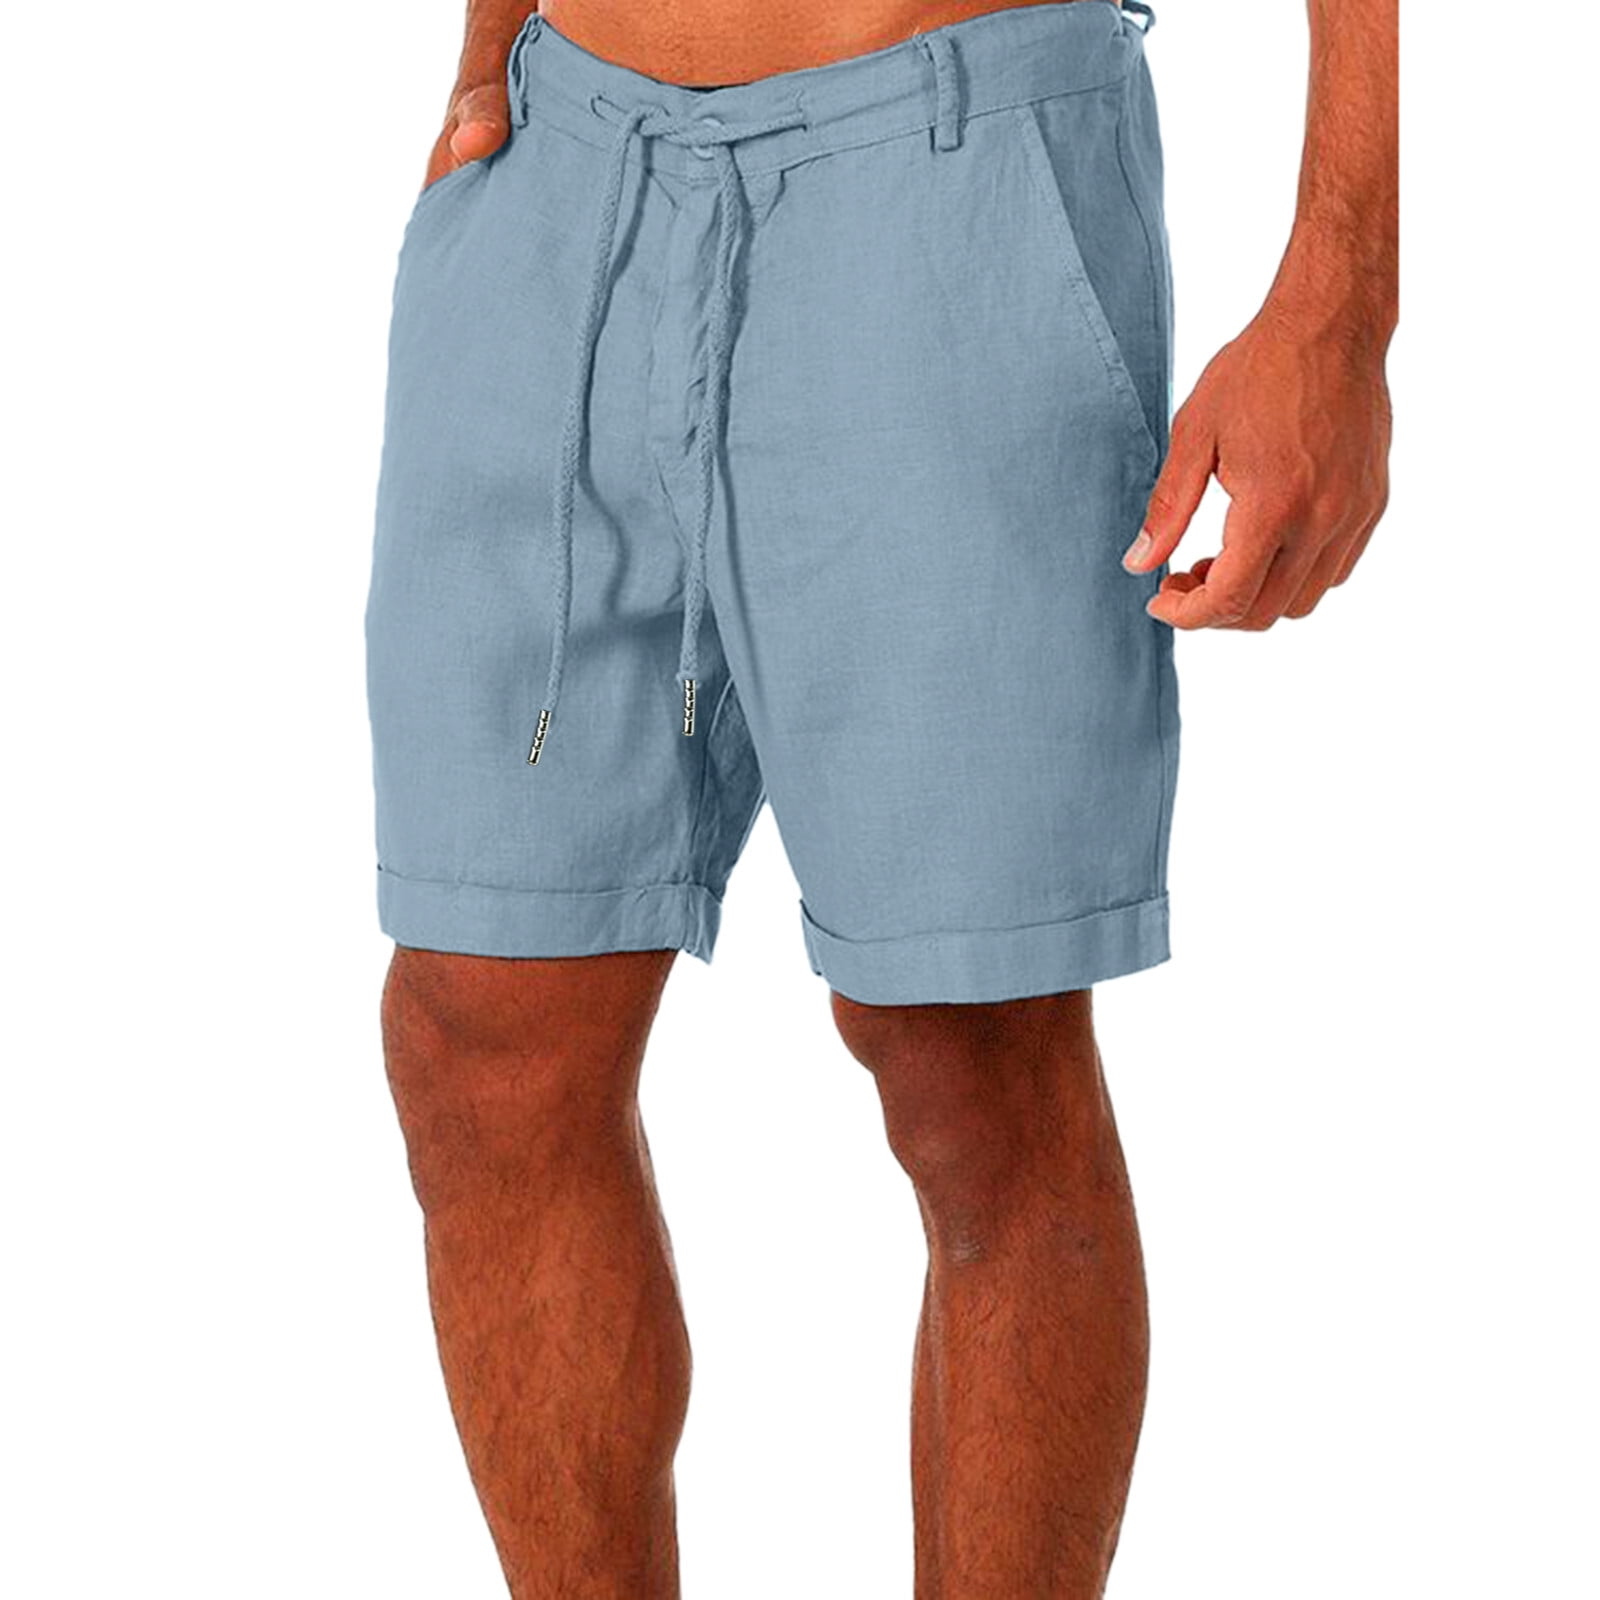 noarlalf mens shorts men's summer casual and fashionable solid ...